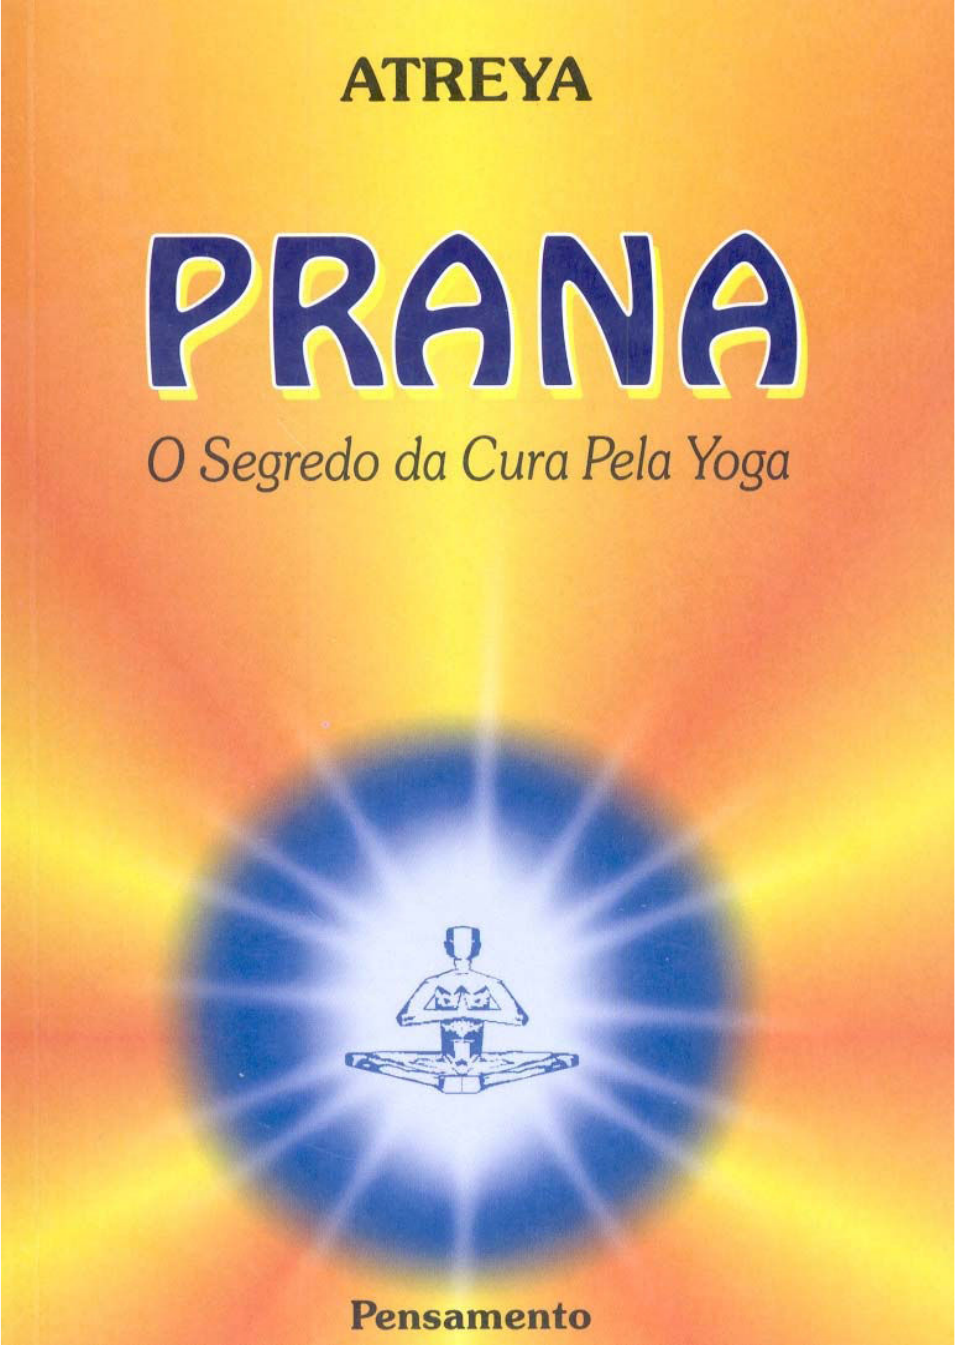 Prana - O Segredo da Cura Pela Yoga (Atreya) - Ayurveda